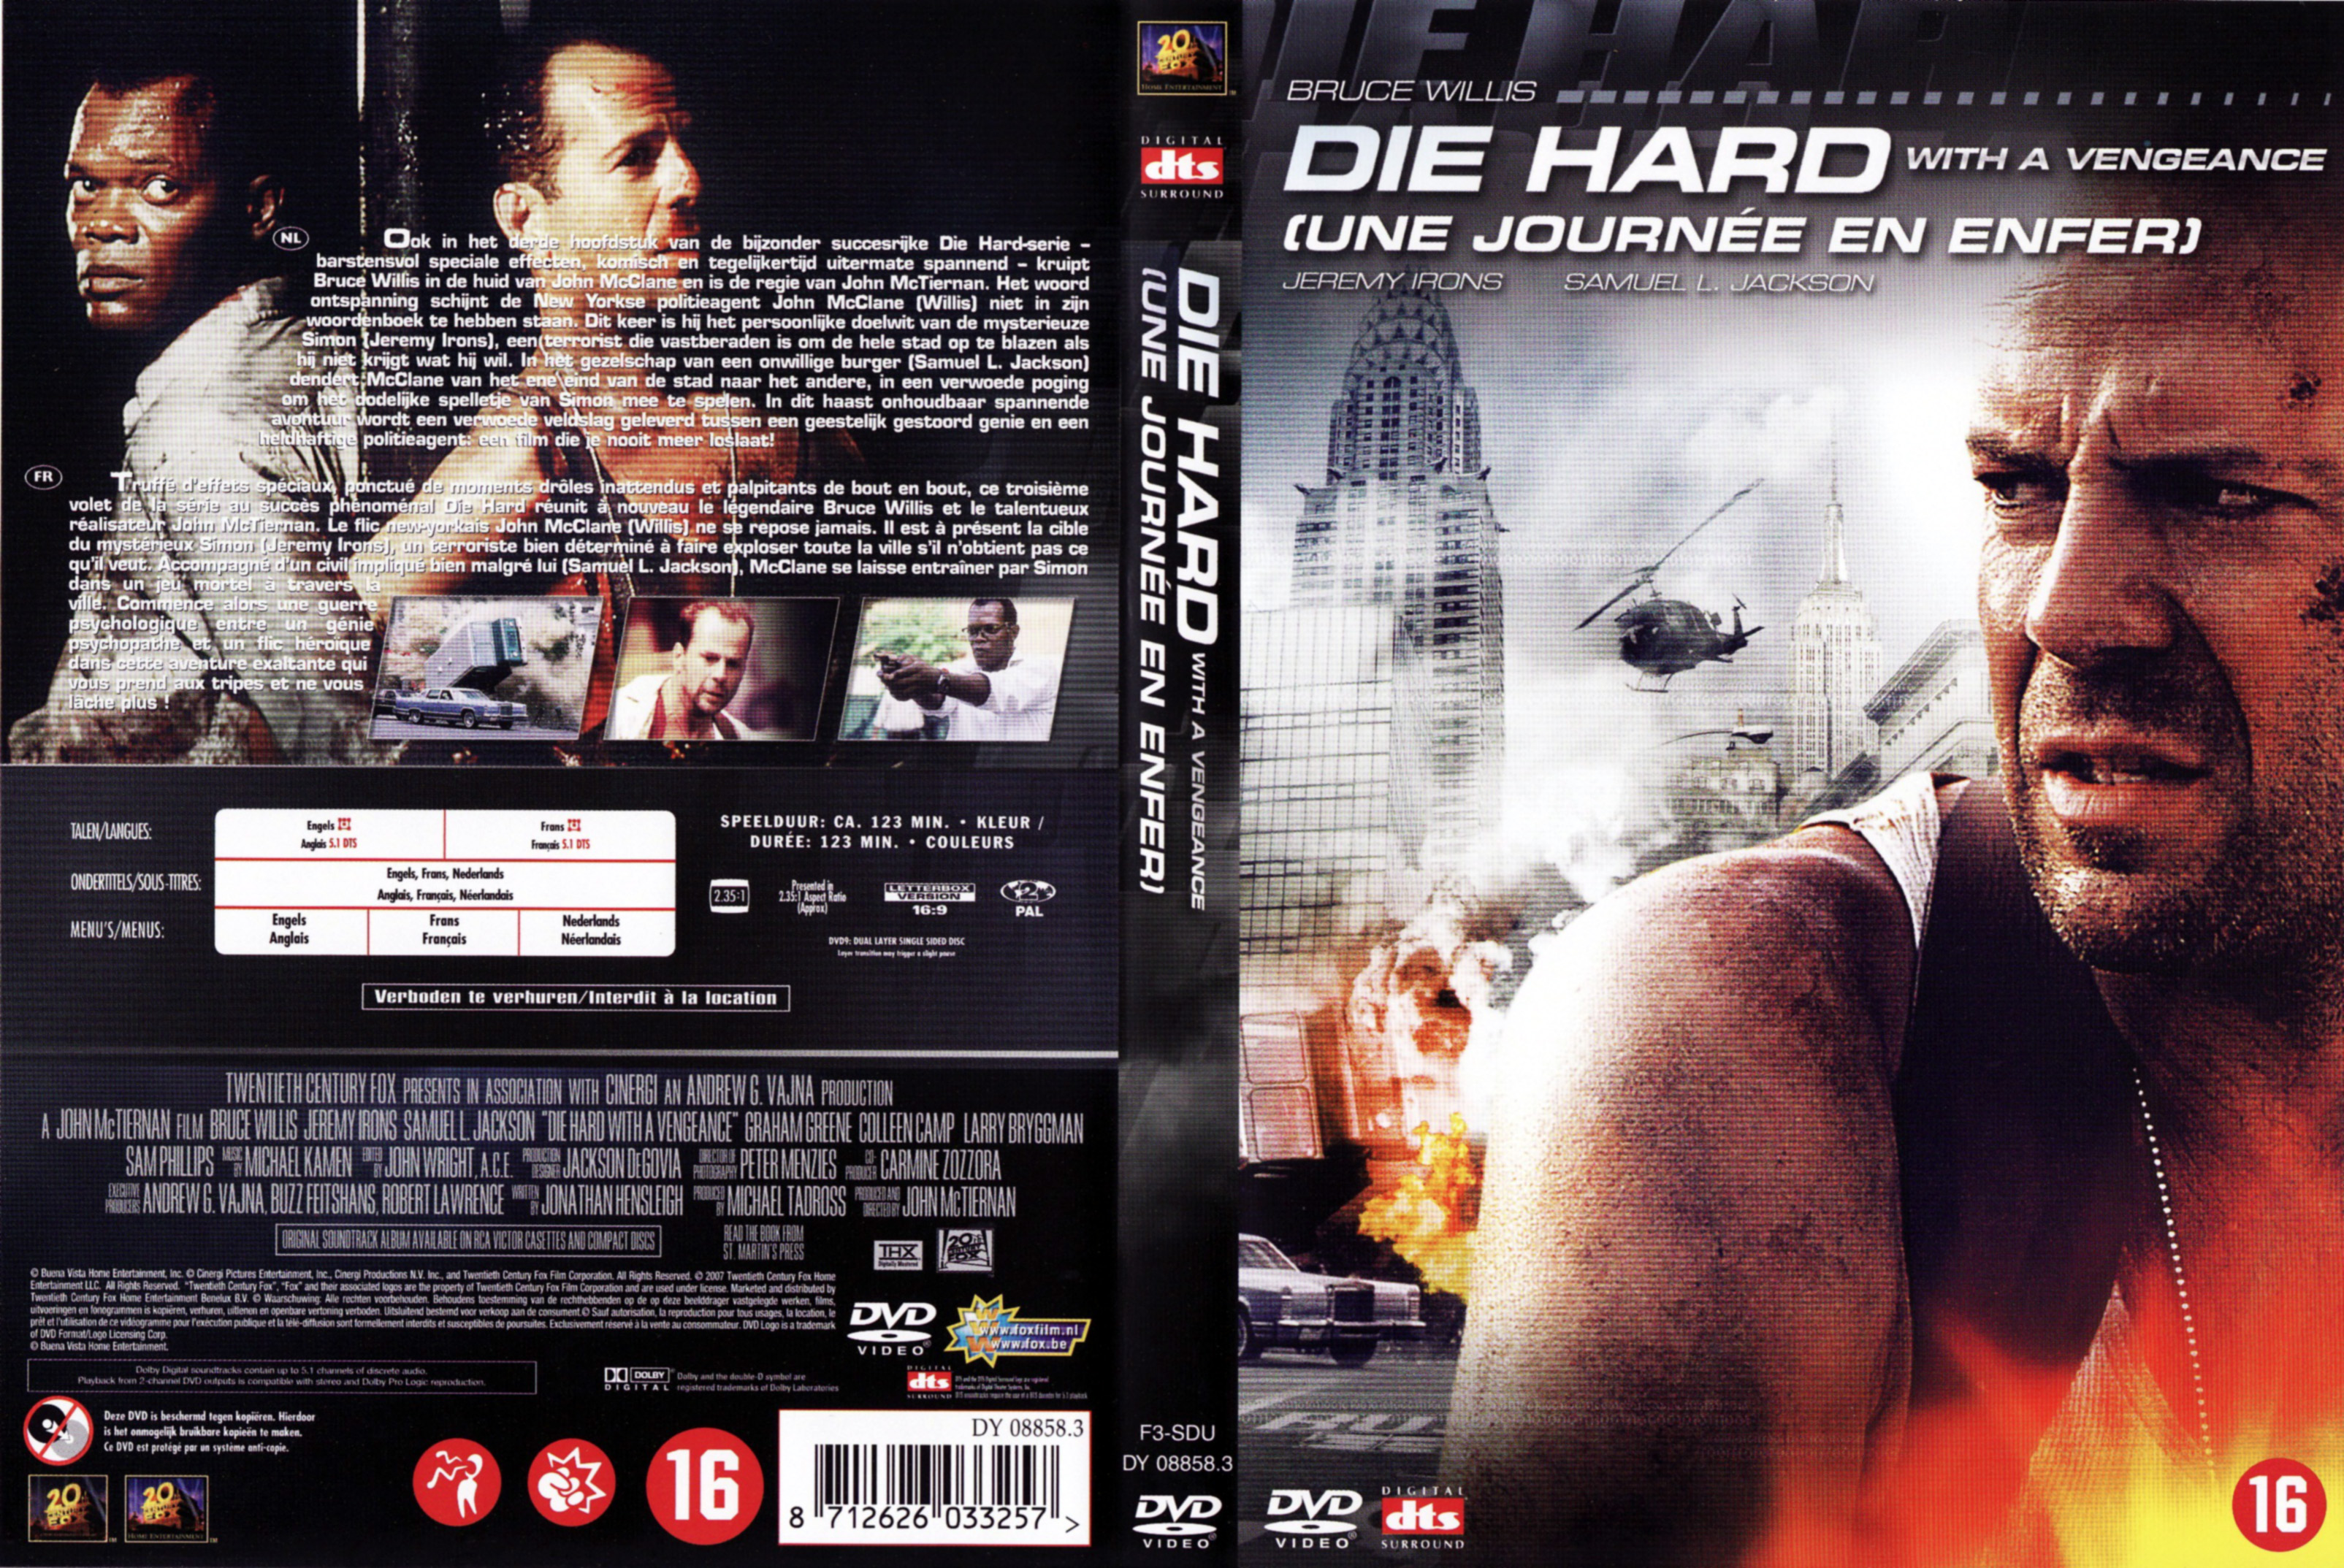 Jaquette DVD Die hard 3 - Une journe en enfer